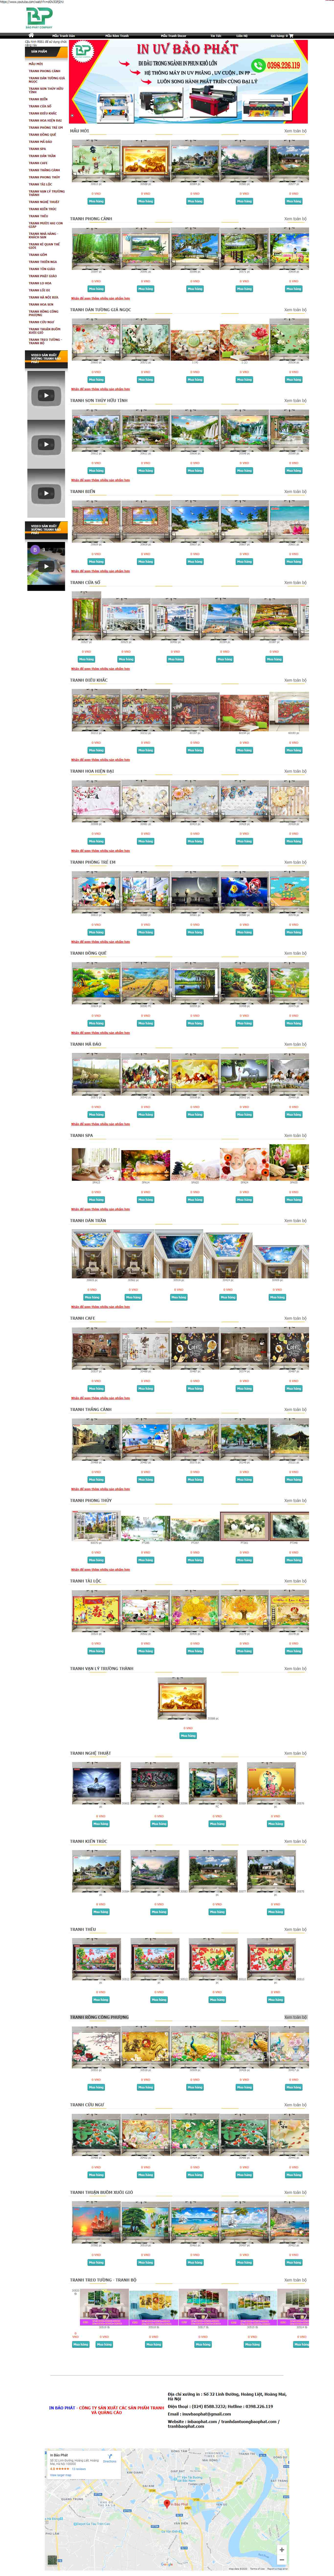 Thiết kế Website tranh dán tường - tranhdantuongbaophat.com